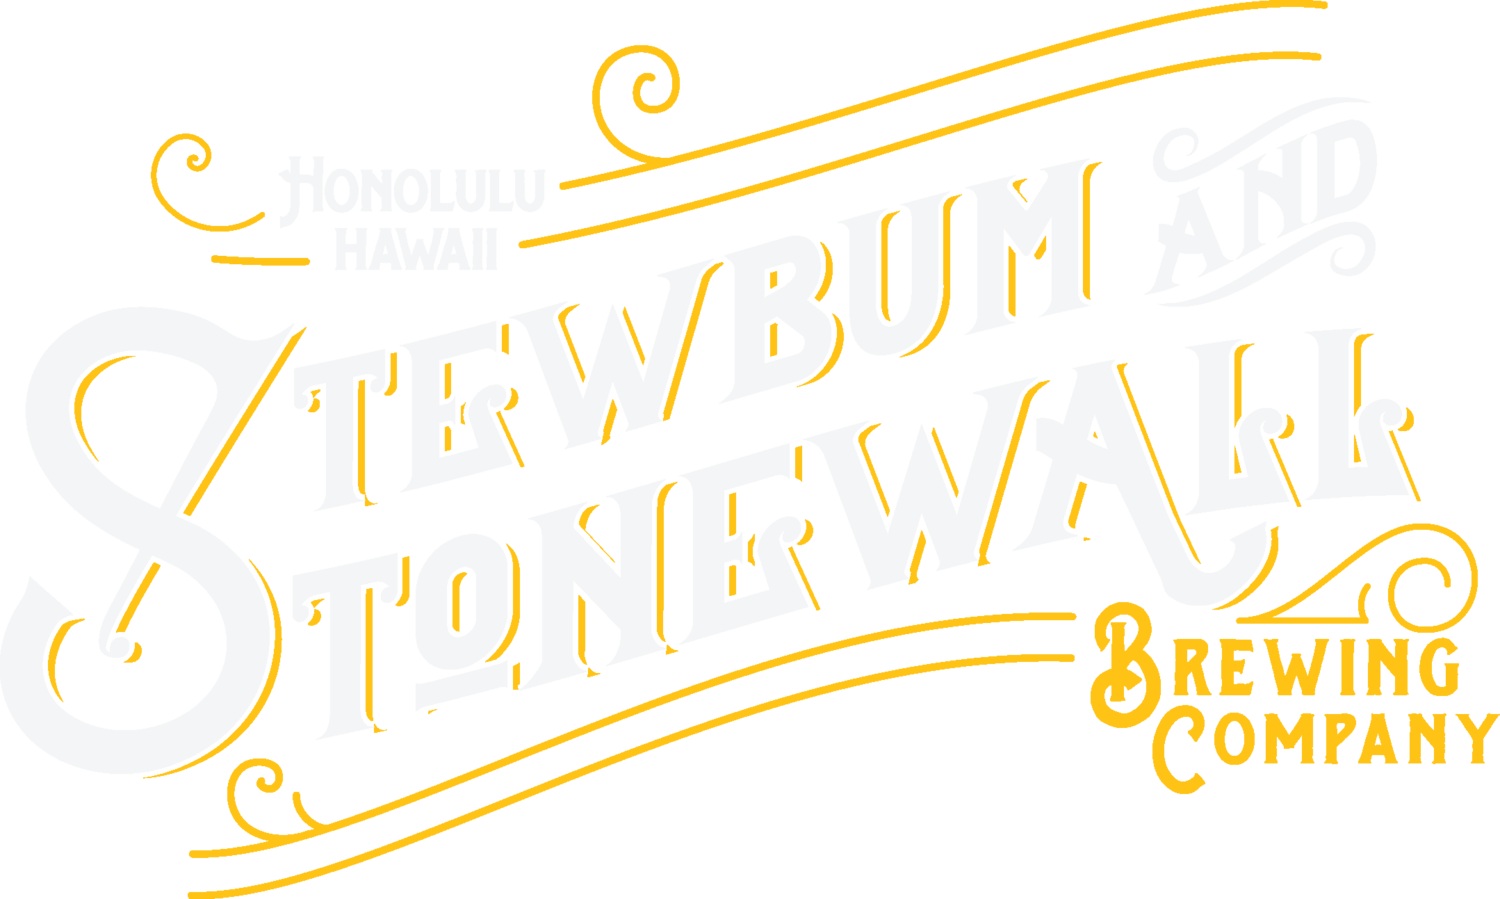 Stewbum & Stonewall Brewing Co.